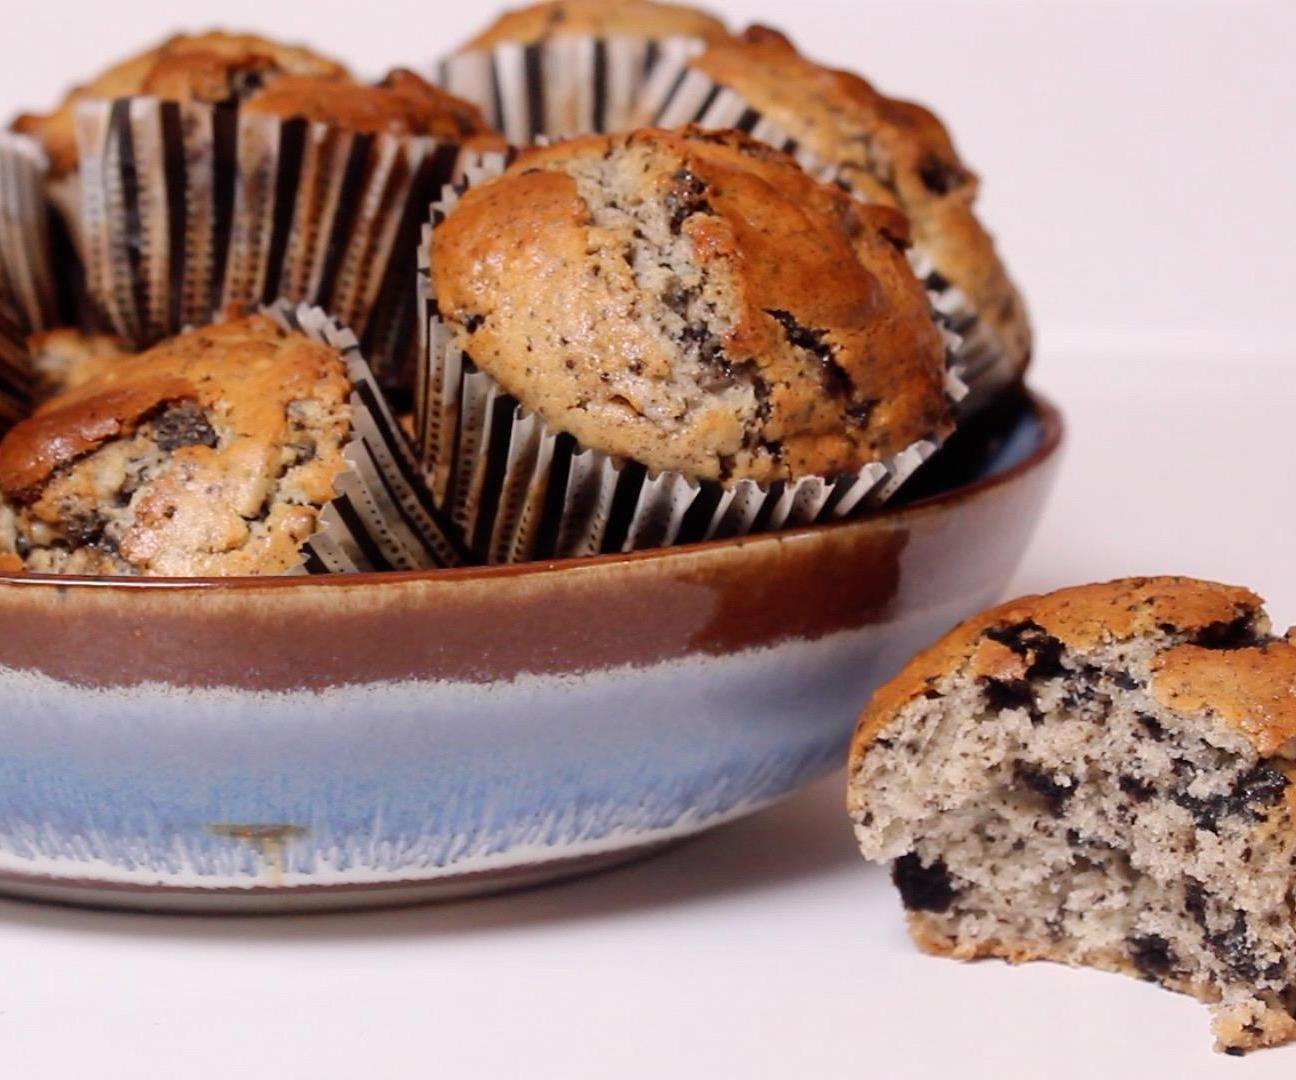 How to Make Oreo Muffins